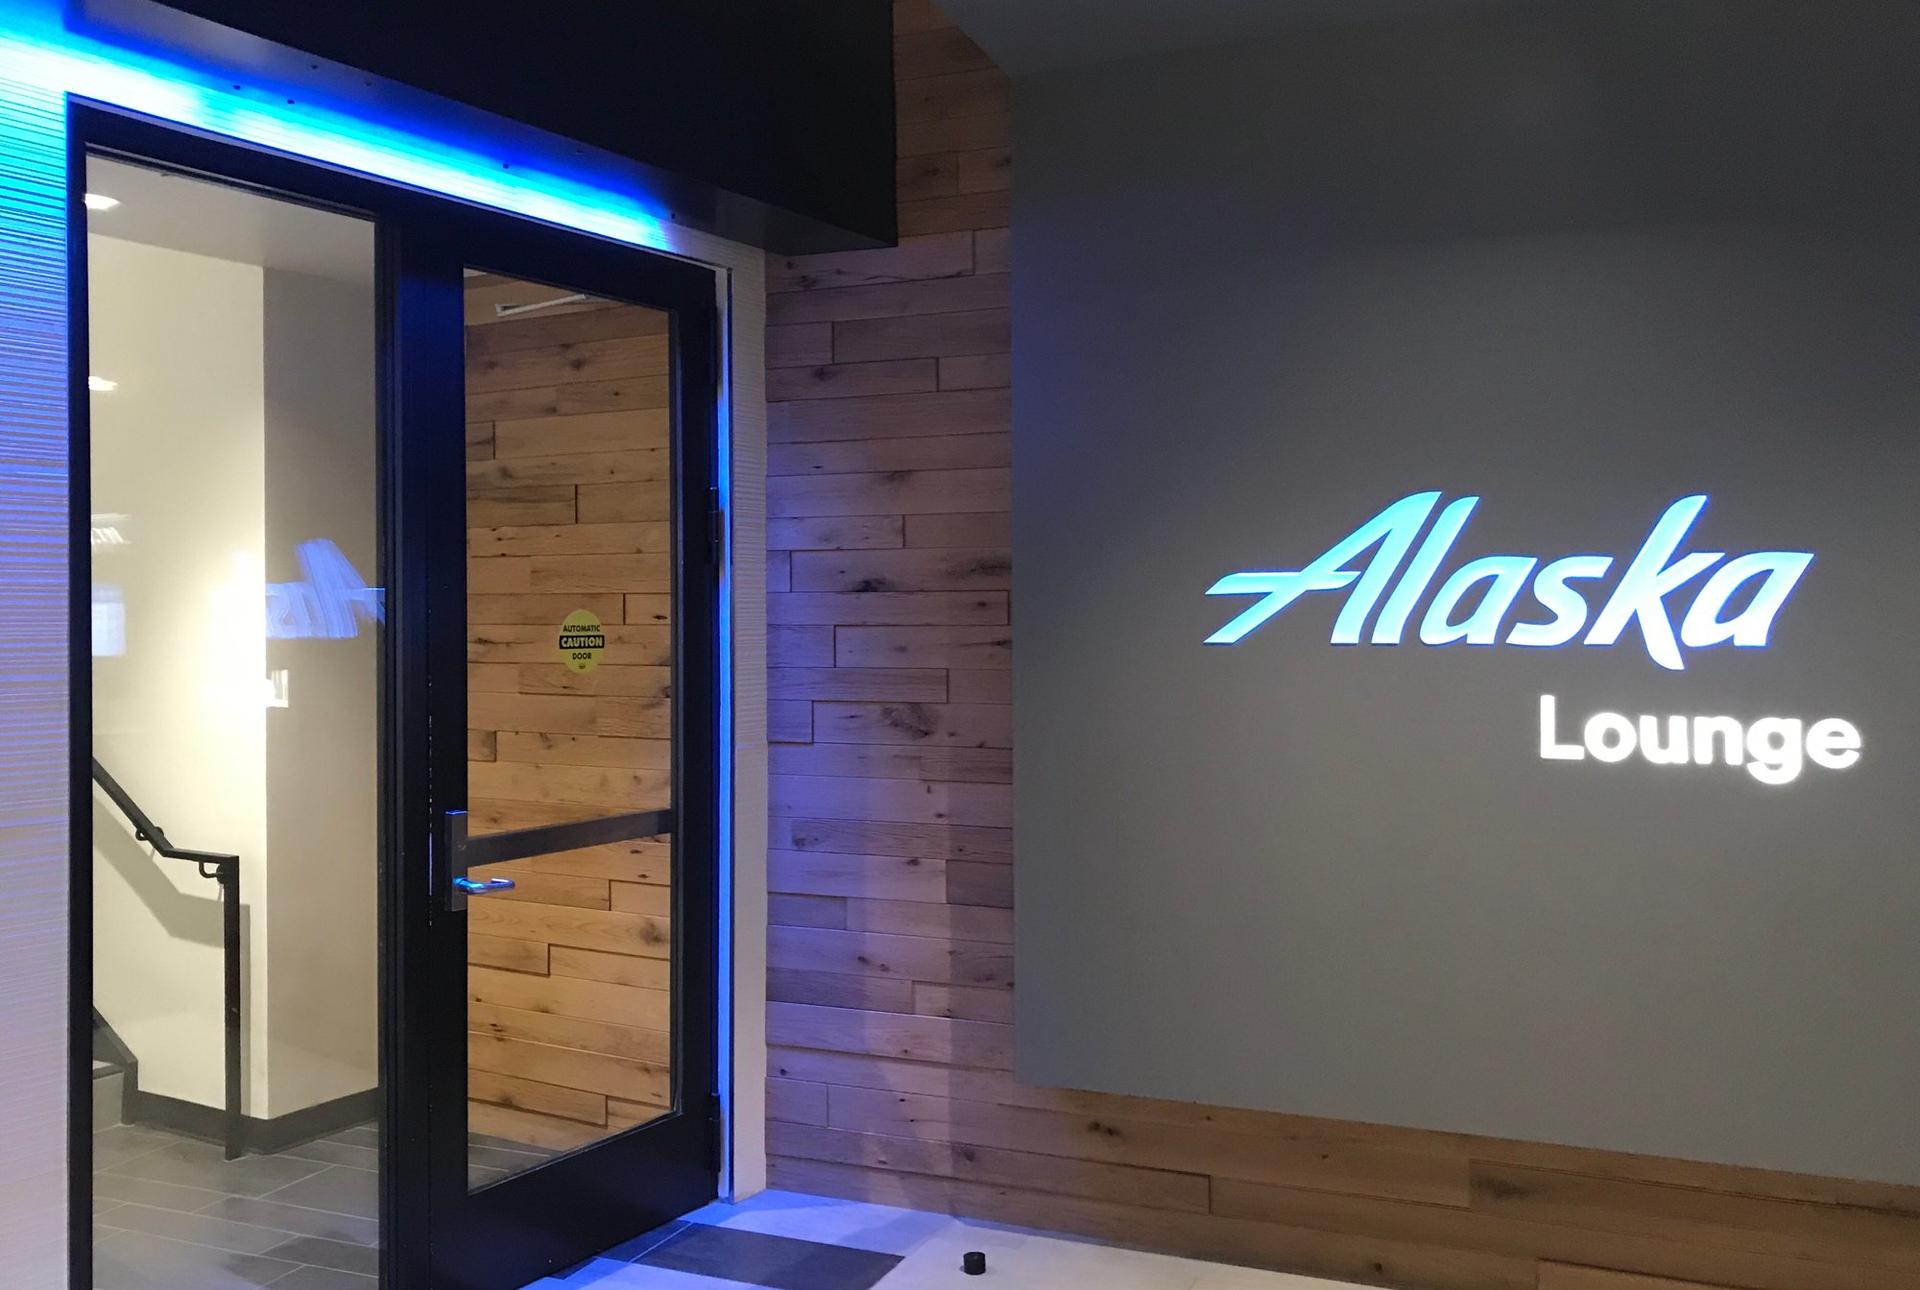 Alaska Airlines Alaska Lounge image 7 of 36